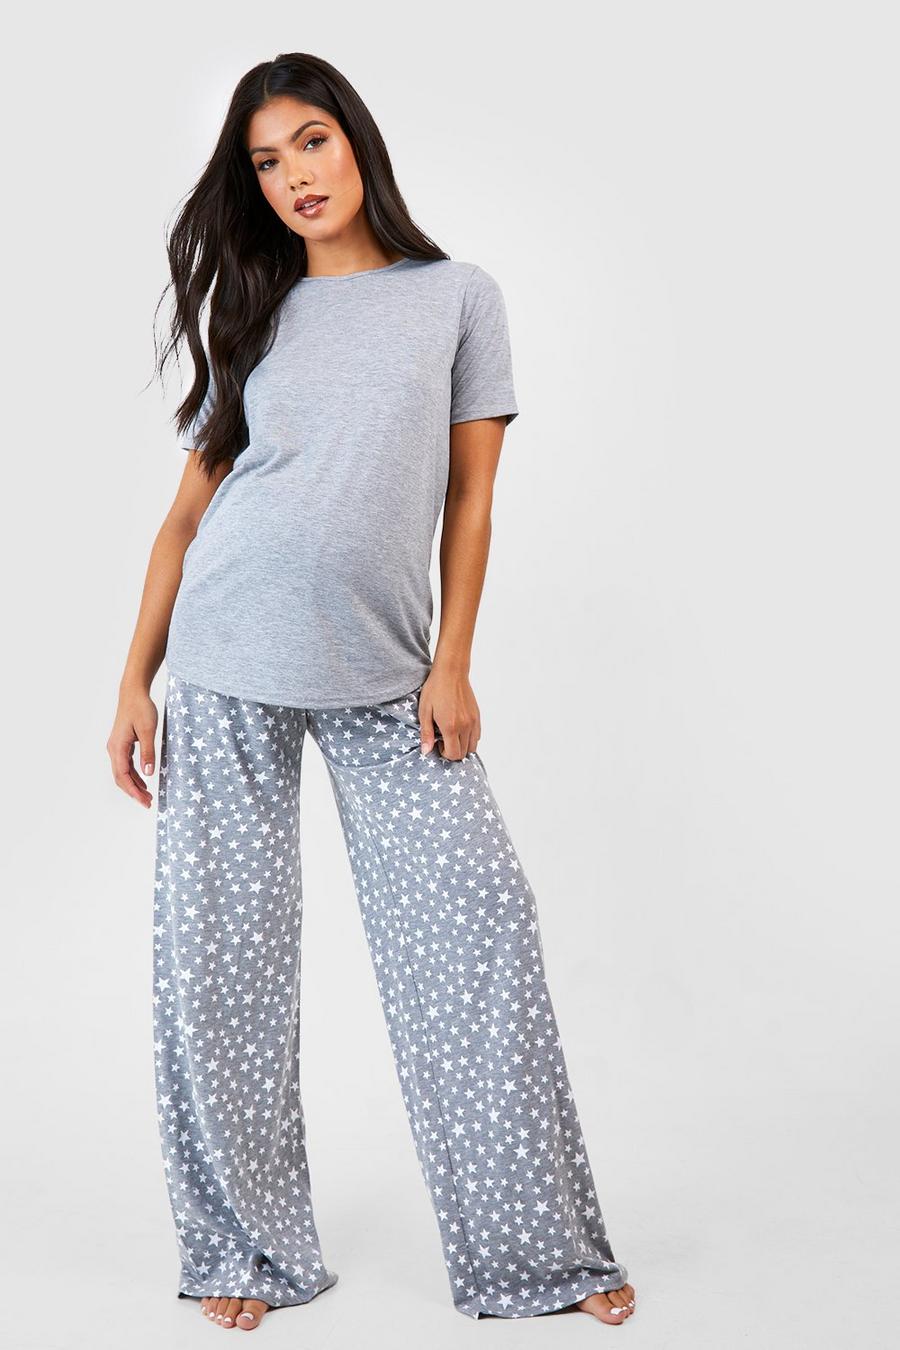 Grey Maternity Star Print Pants Pyjama Set